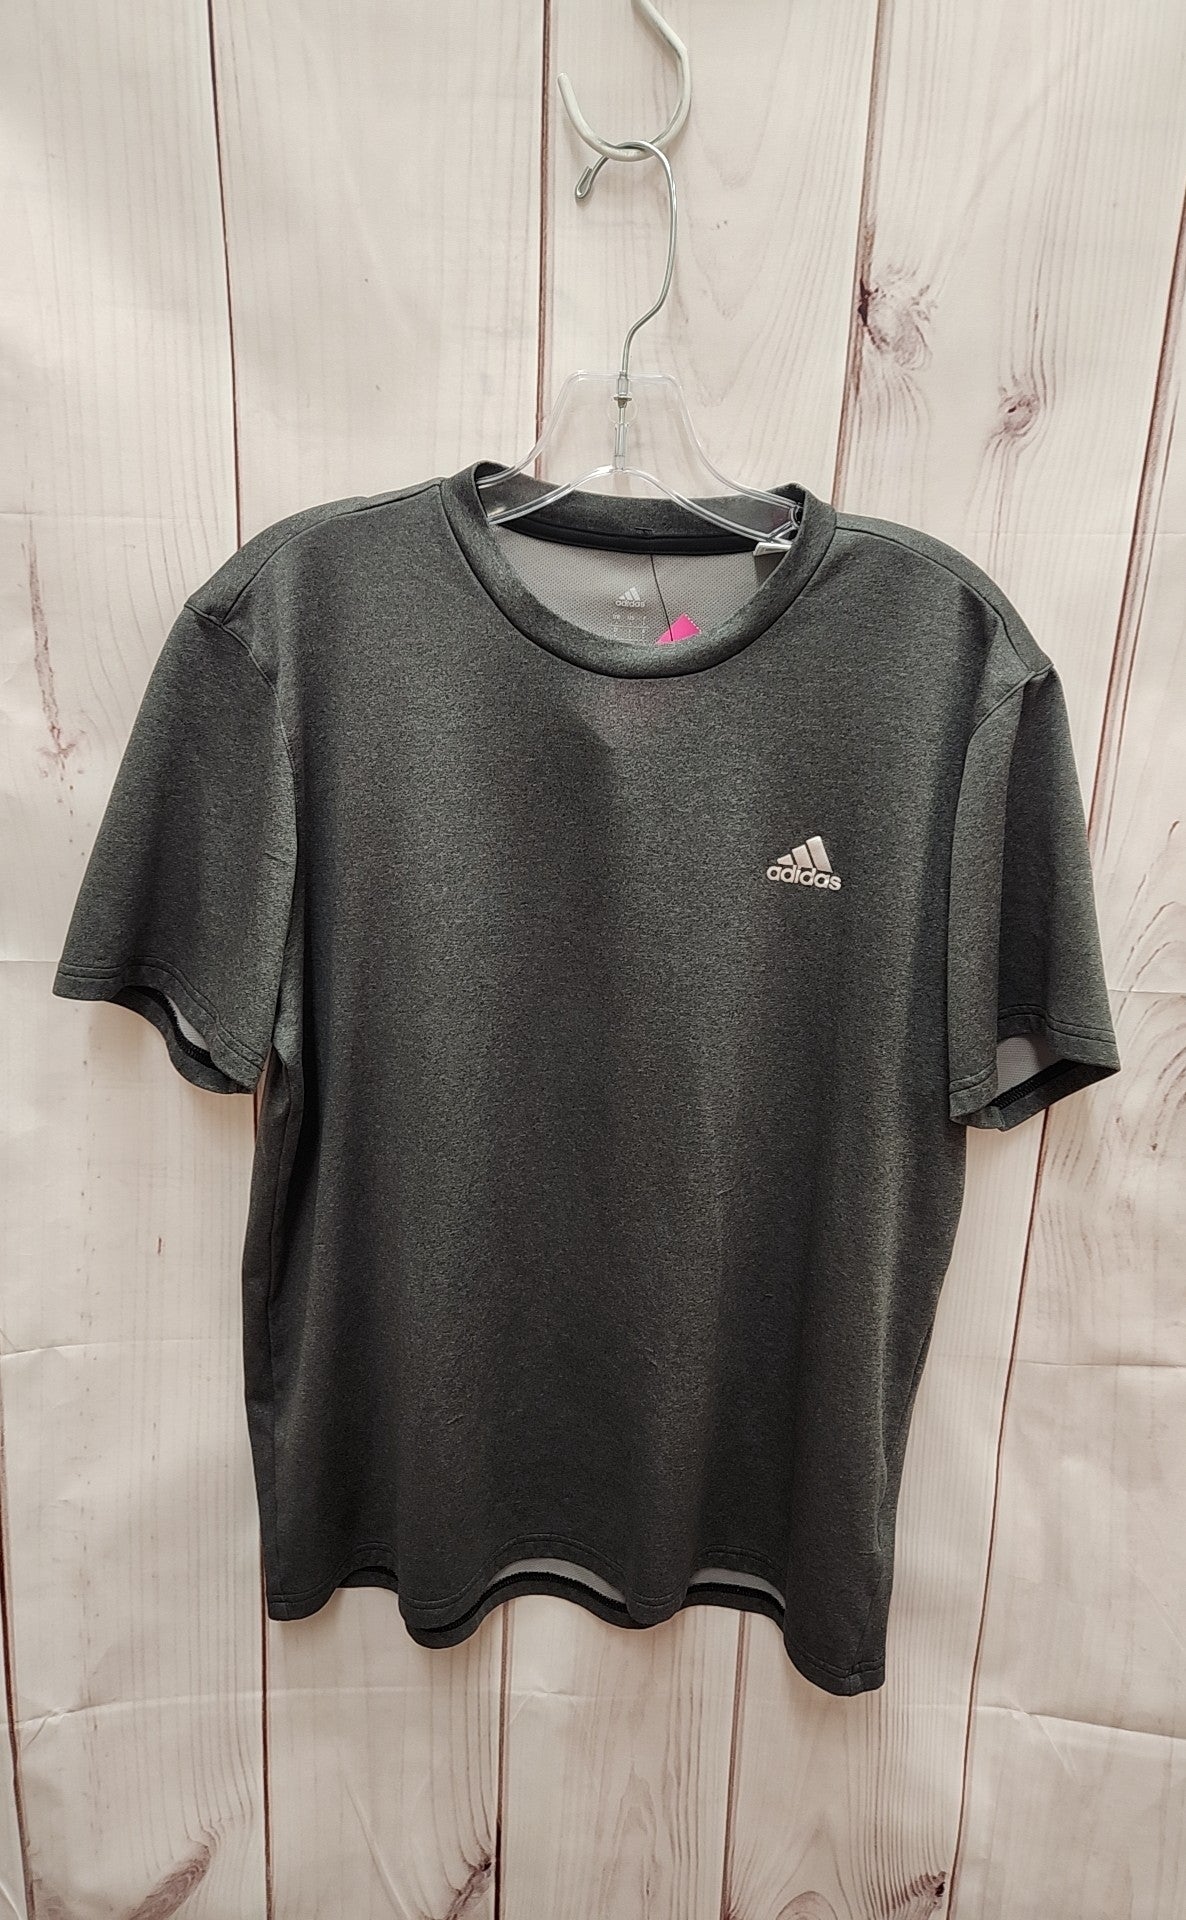 Adidas Men's Size L Gray Shirt